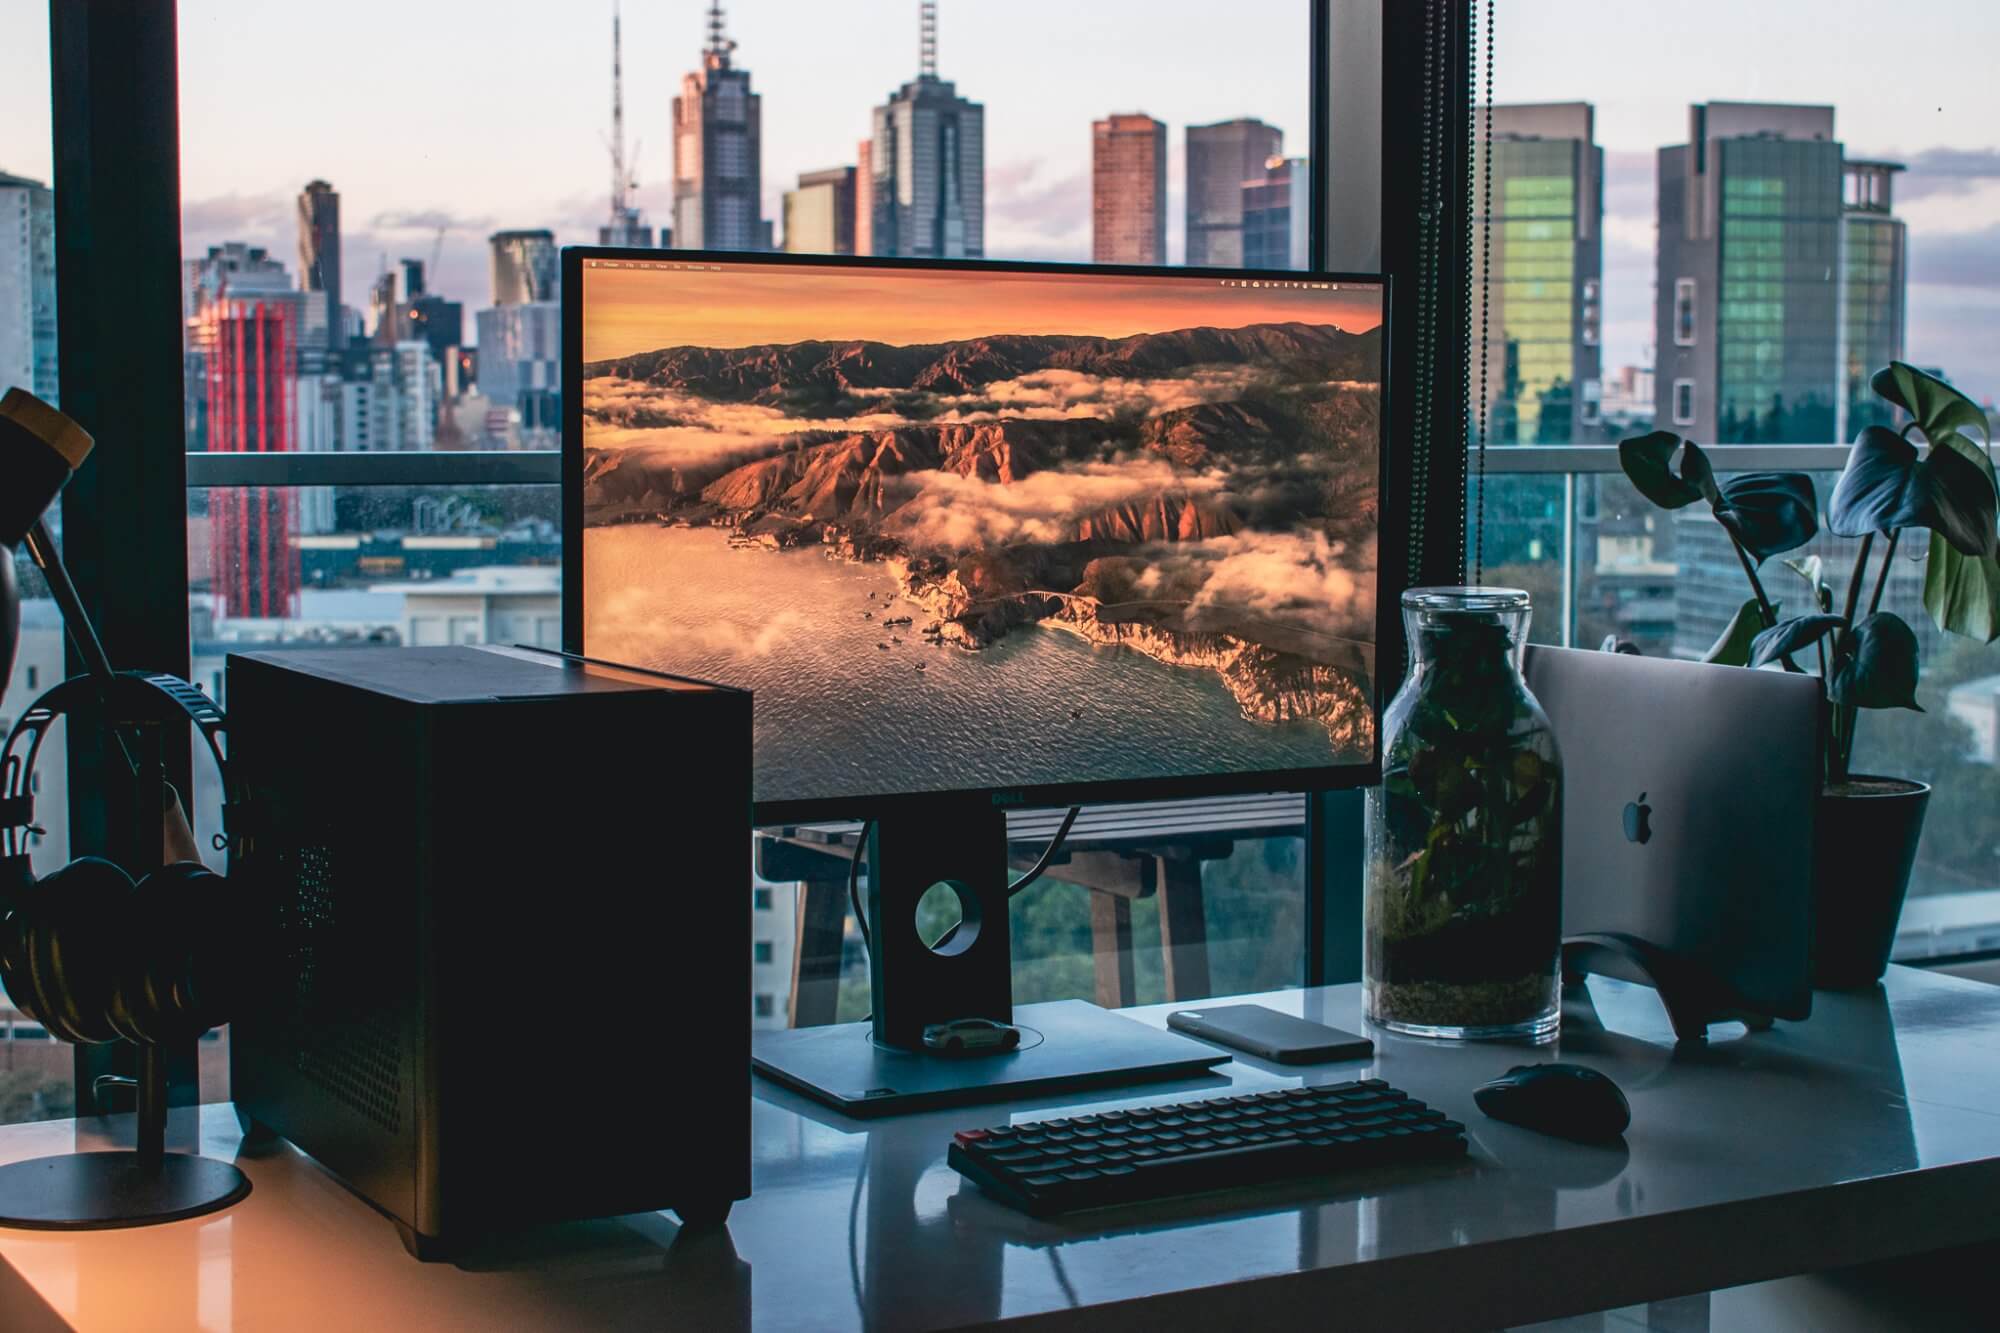 A minimalist desk setup with a sleek monitor, terrarium, and MacBook, overlooking an impressive city skyline through large windows